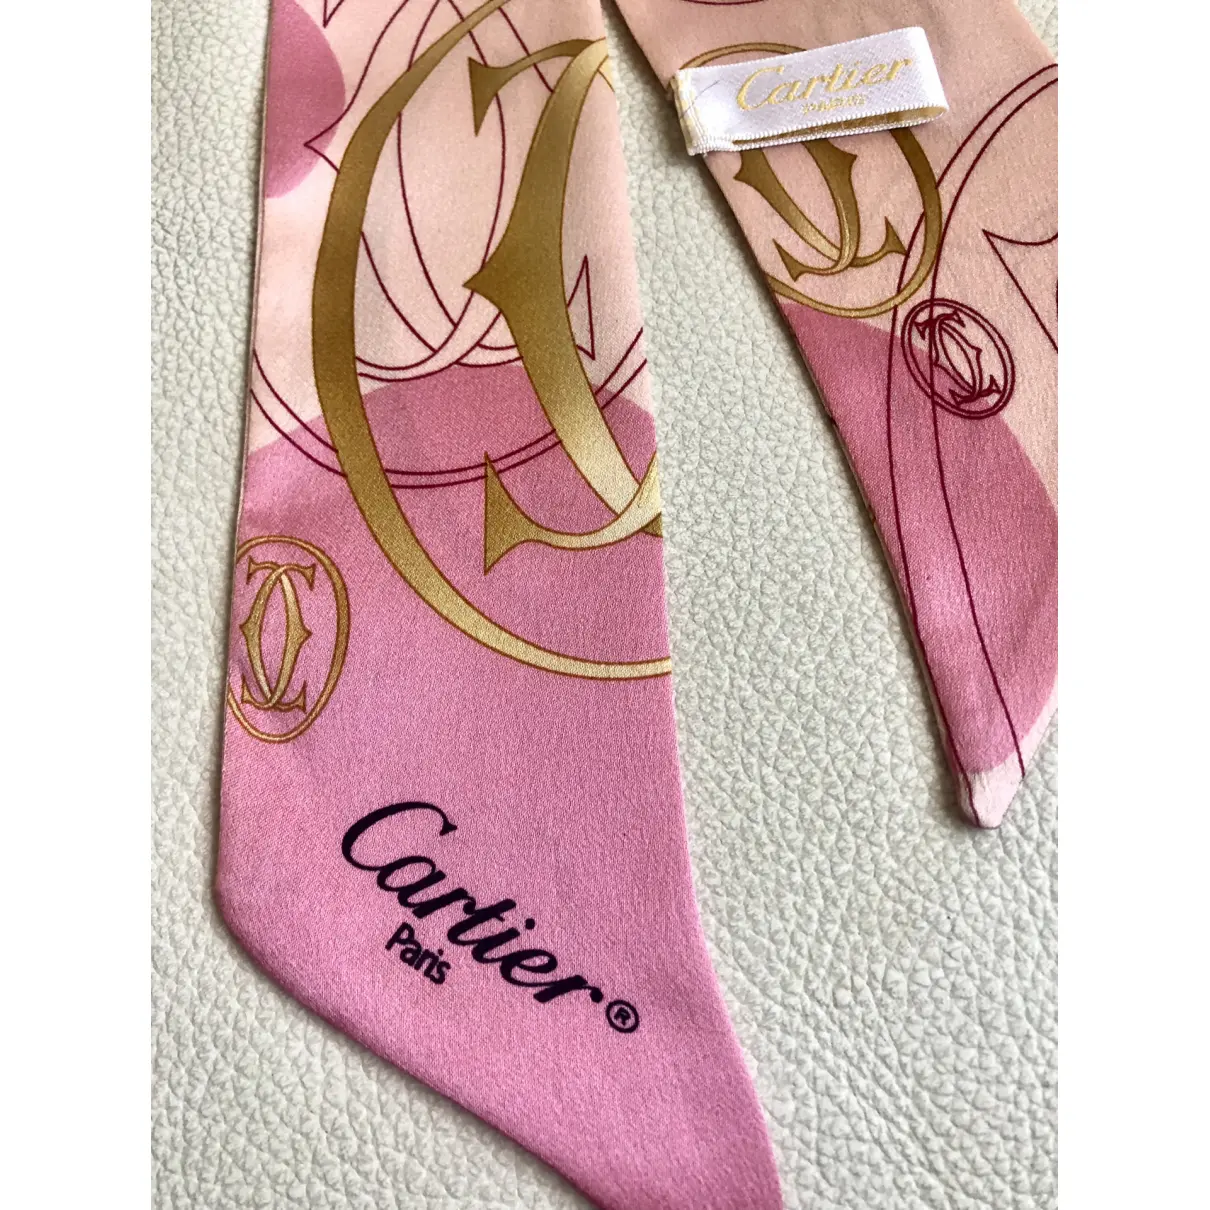 Buy Cartier Silk scarf online